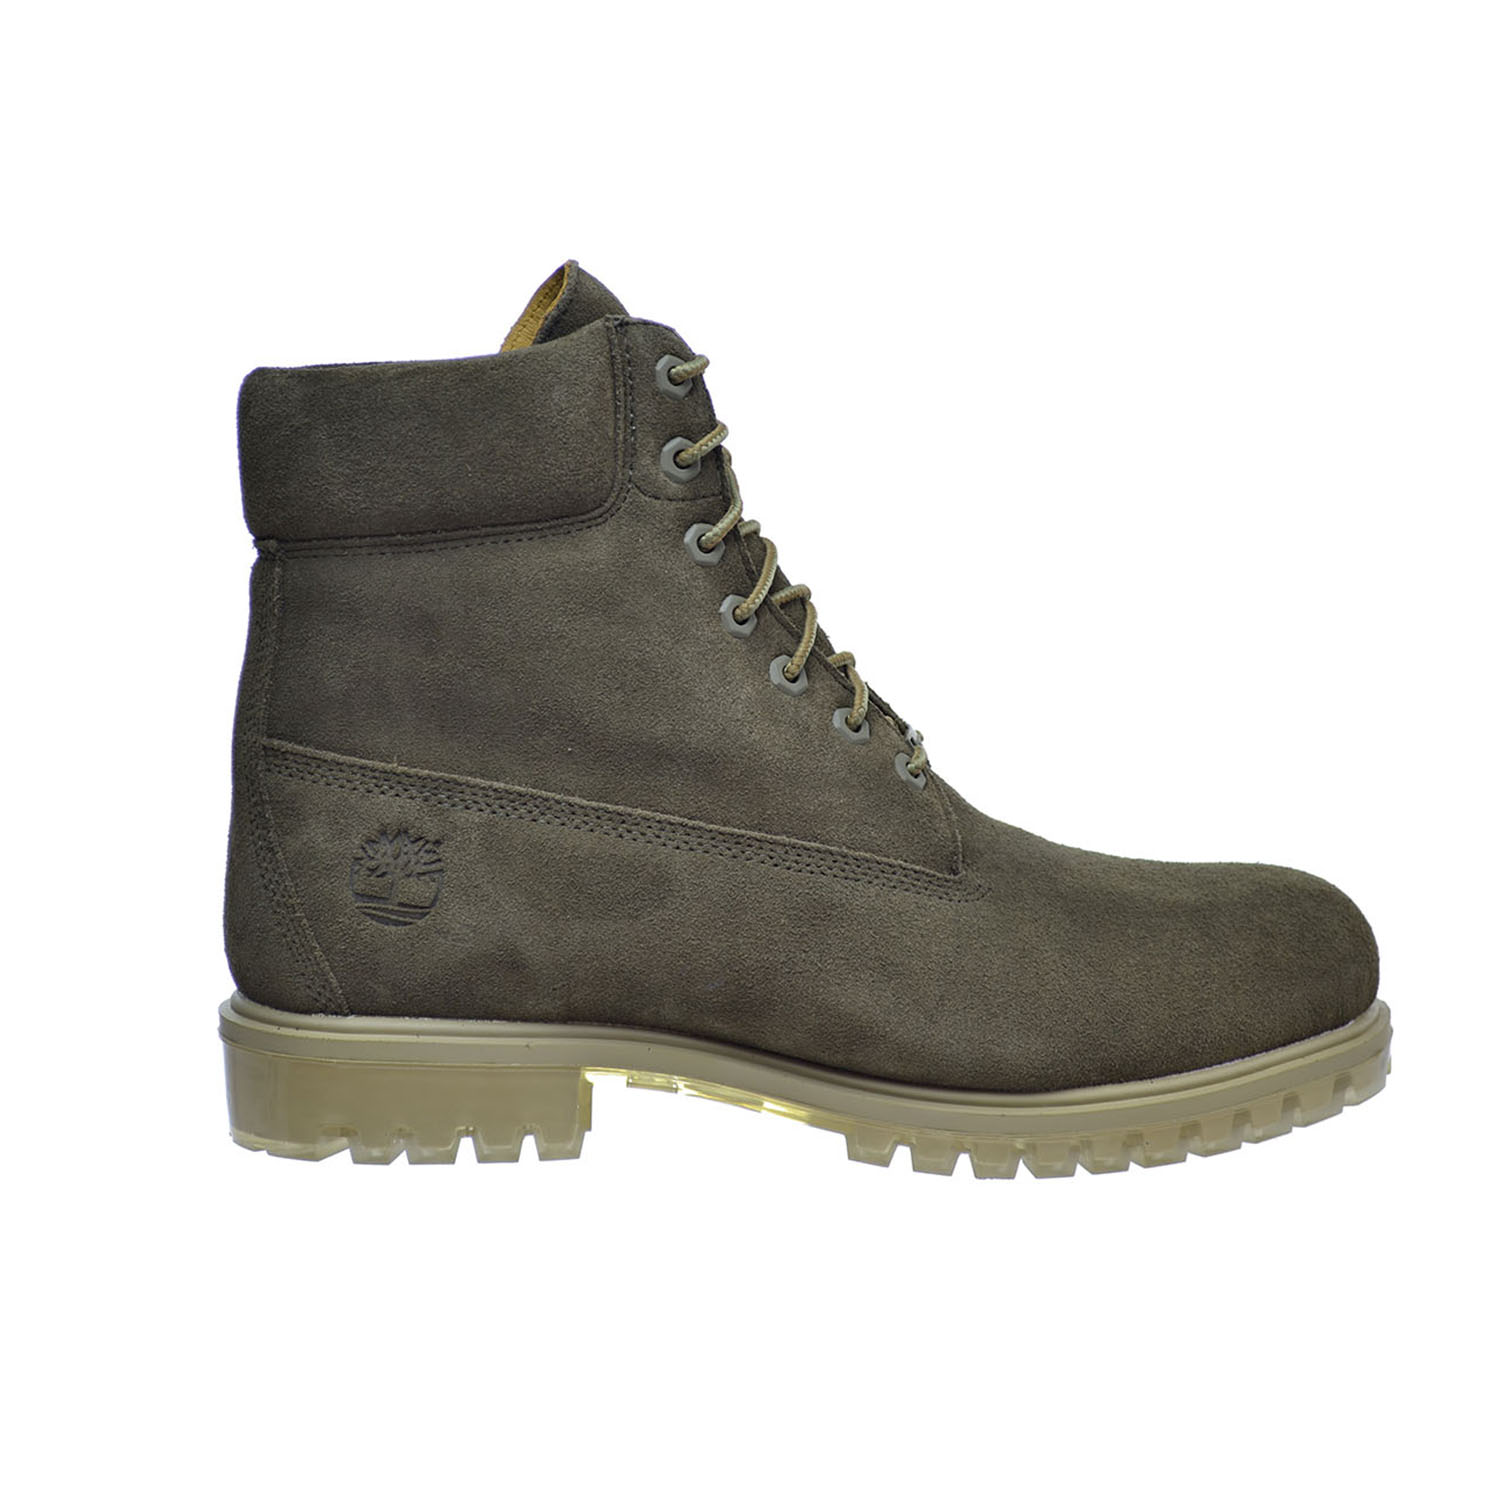 Timberland 6 Inch Men's Premium Suede Boots Green tb0a18pz | eBay